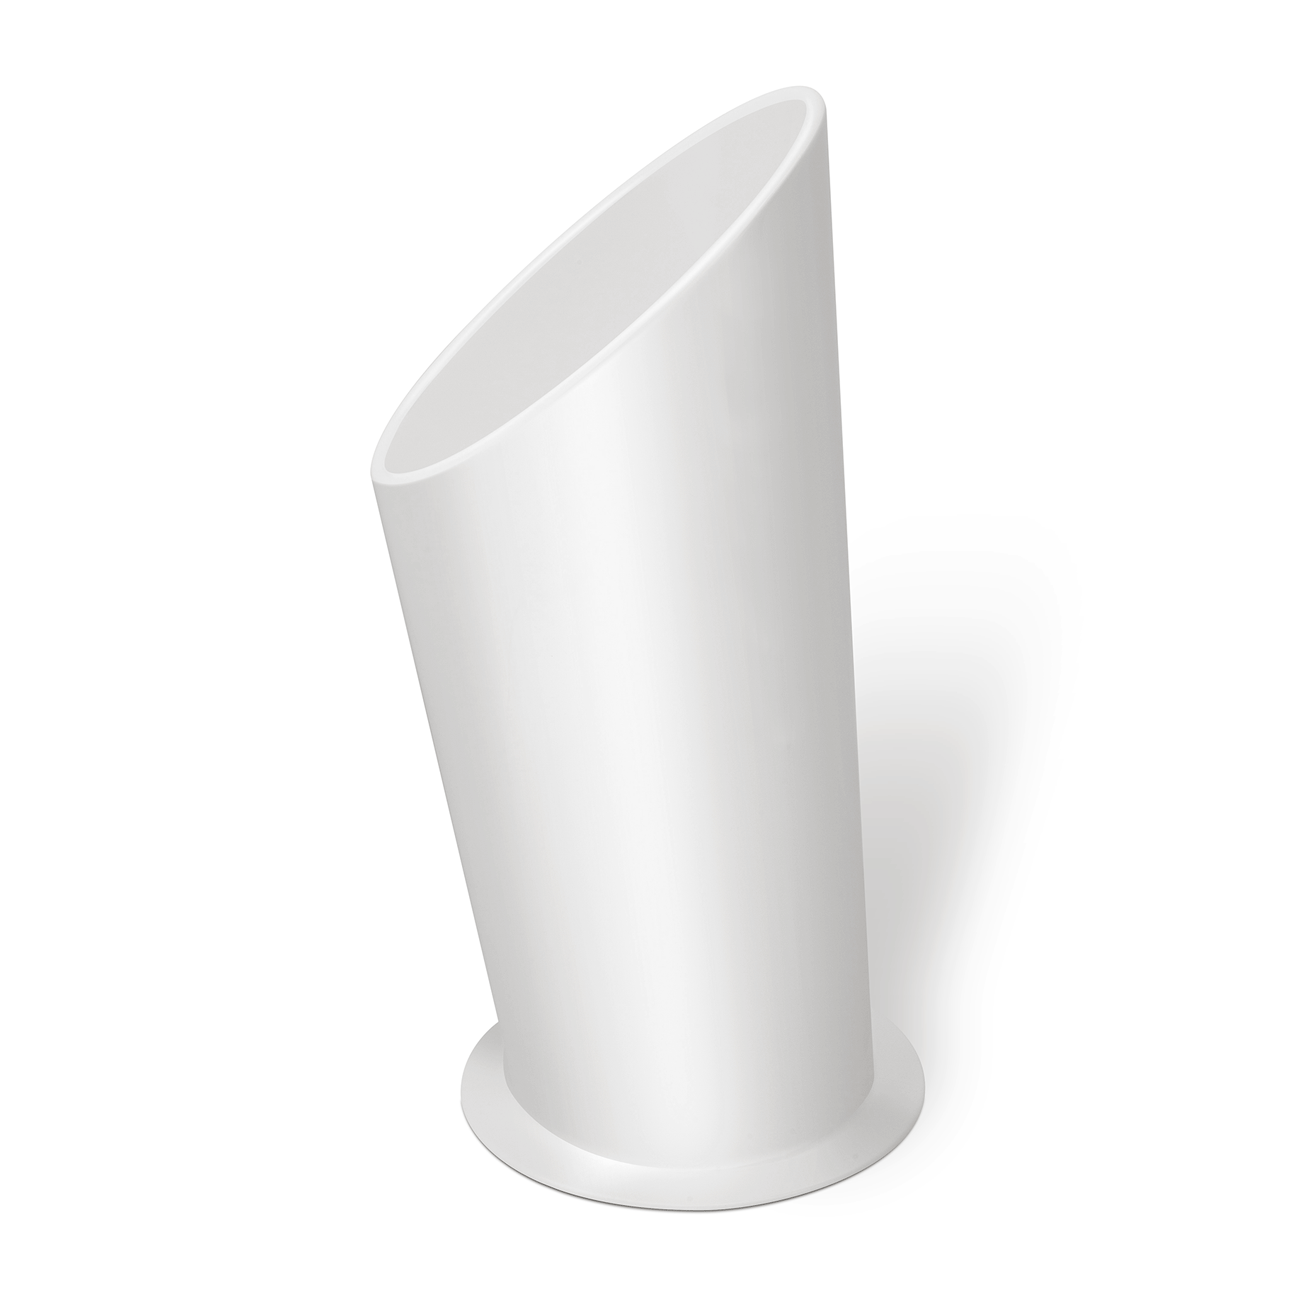 MODELL Pylon Weiß 3D Ansicht